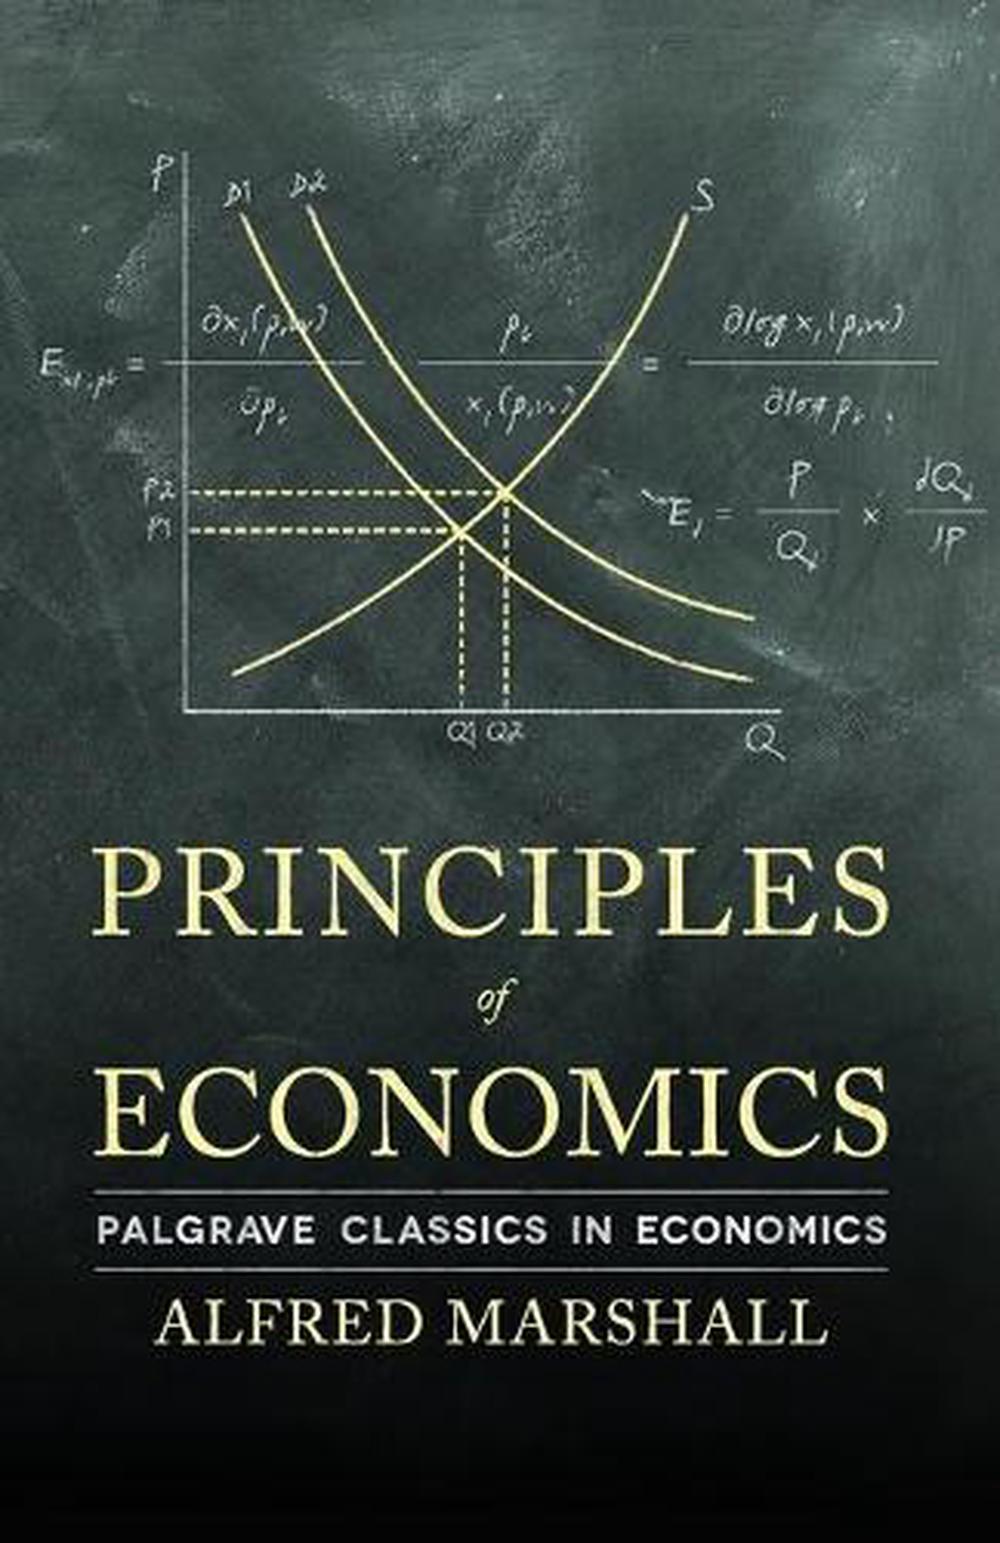 economics phd books